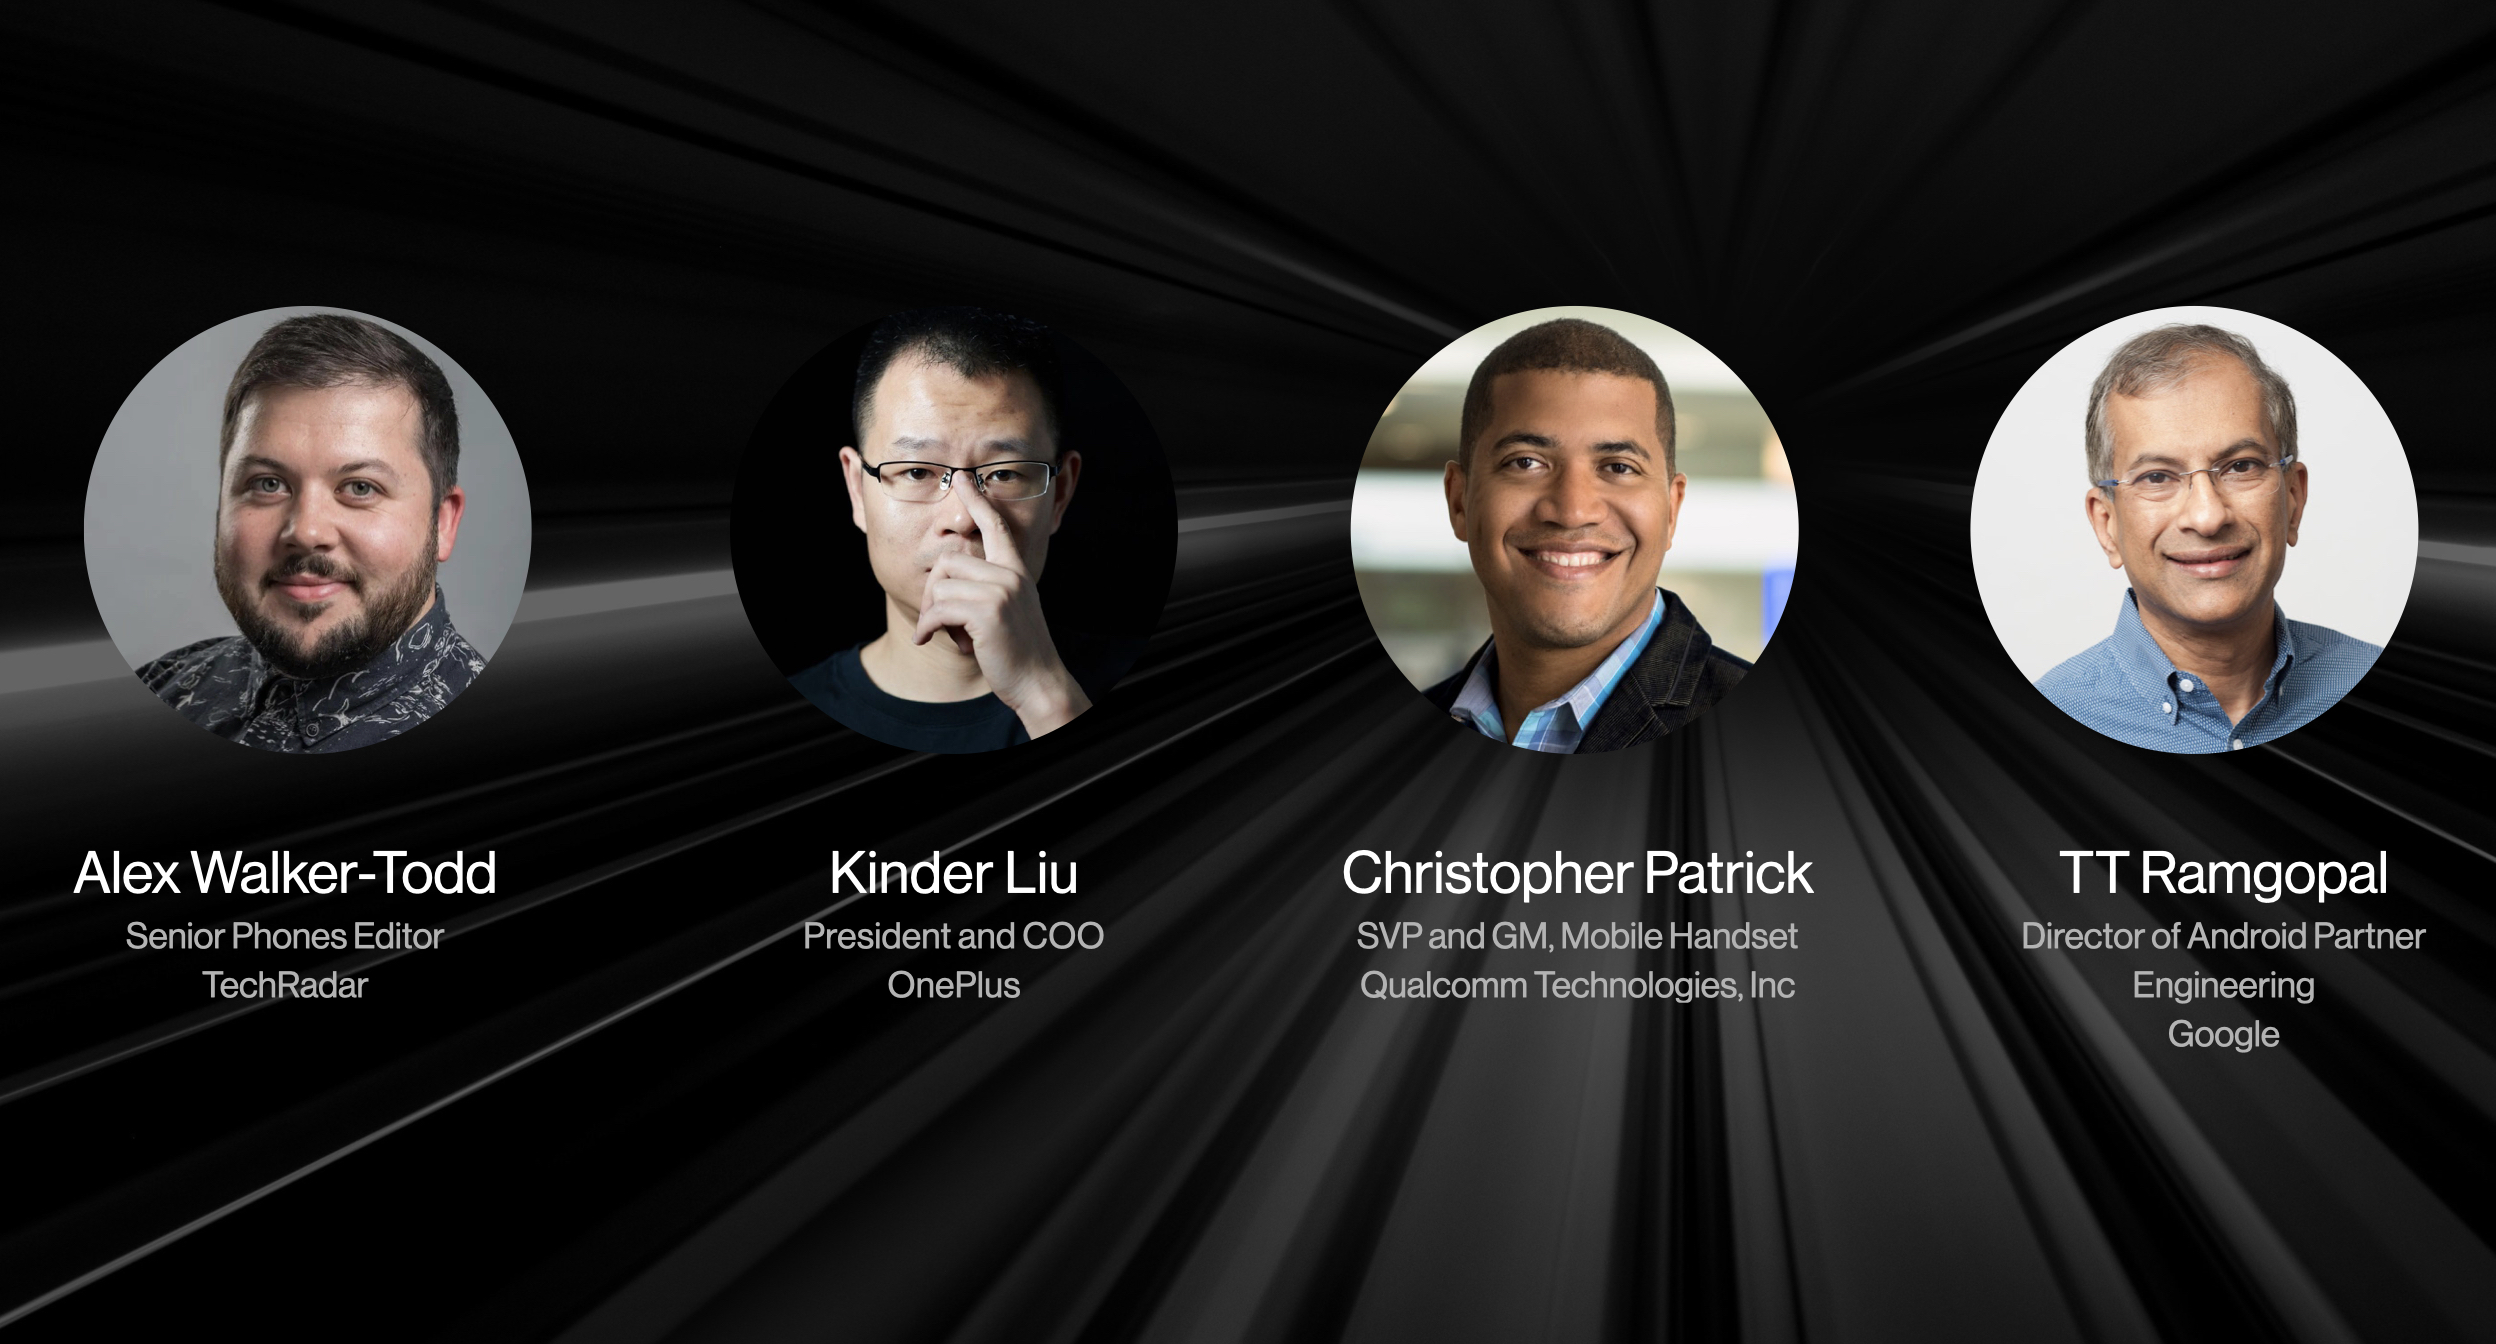 OnePlus panelists